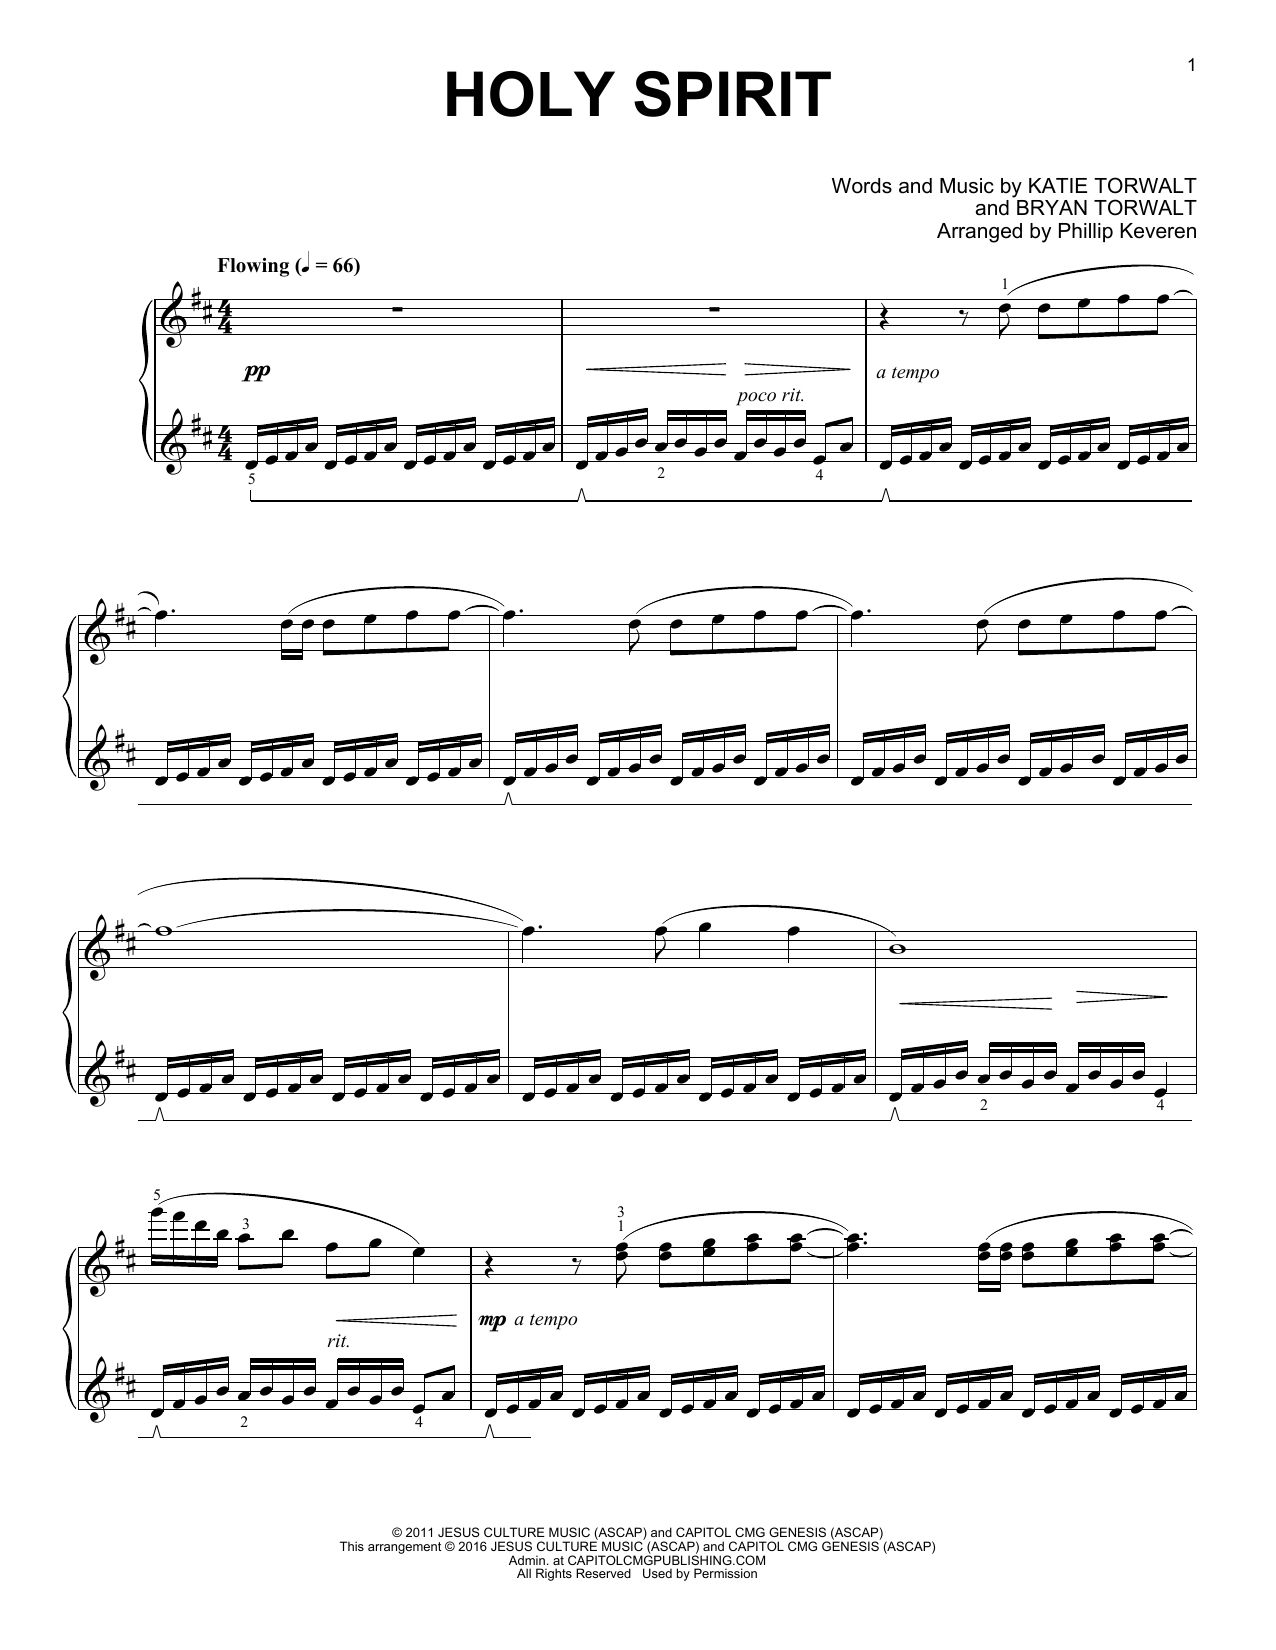 Francesca Battistelli Holy Spirit (arr. Phillip Keveren) Sheet Music Notes & Chords for Piano Solo - Download or Print PDF